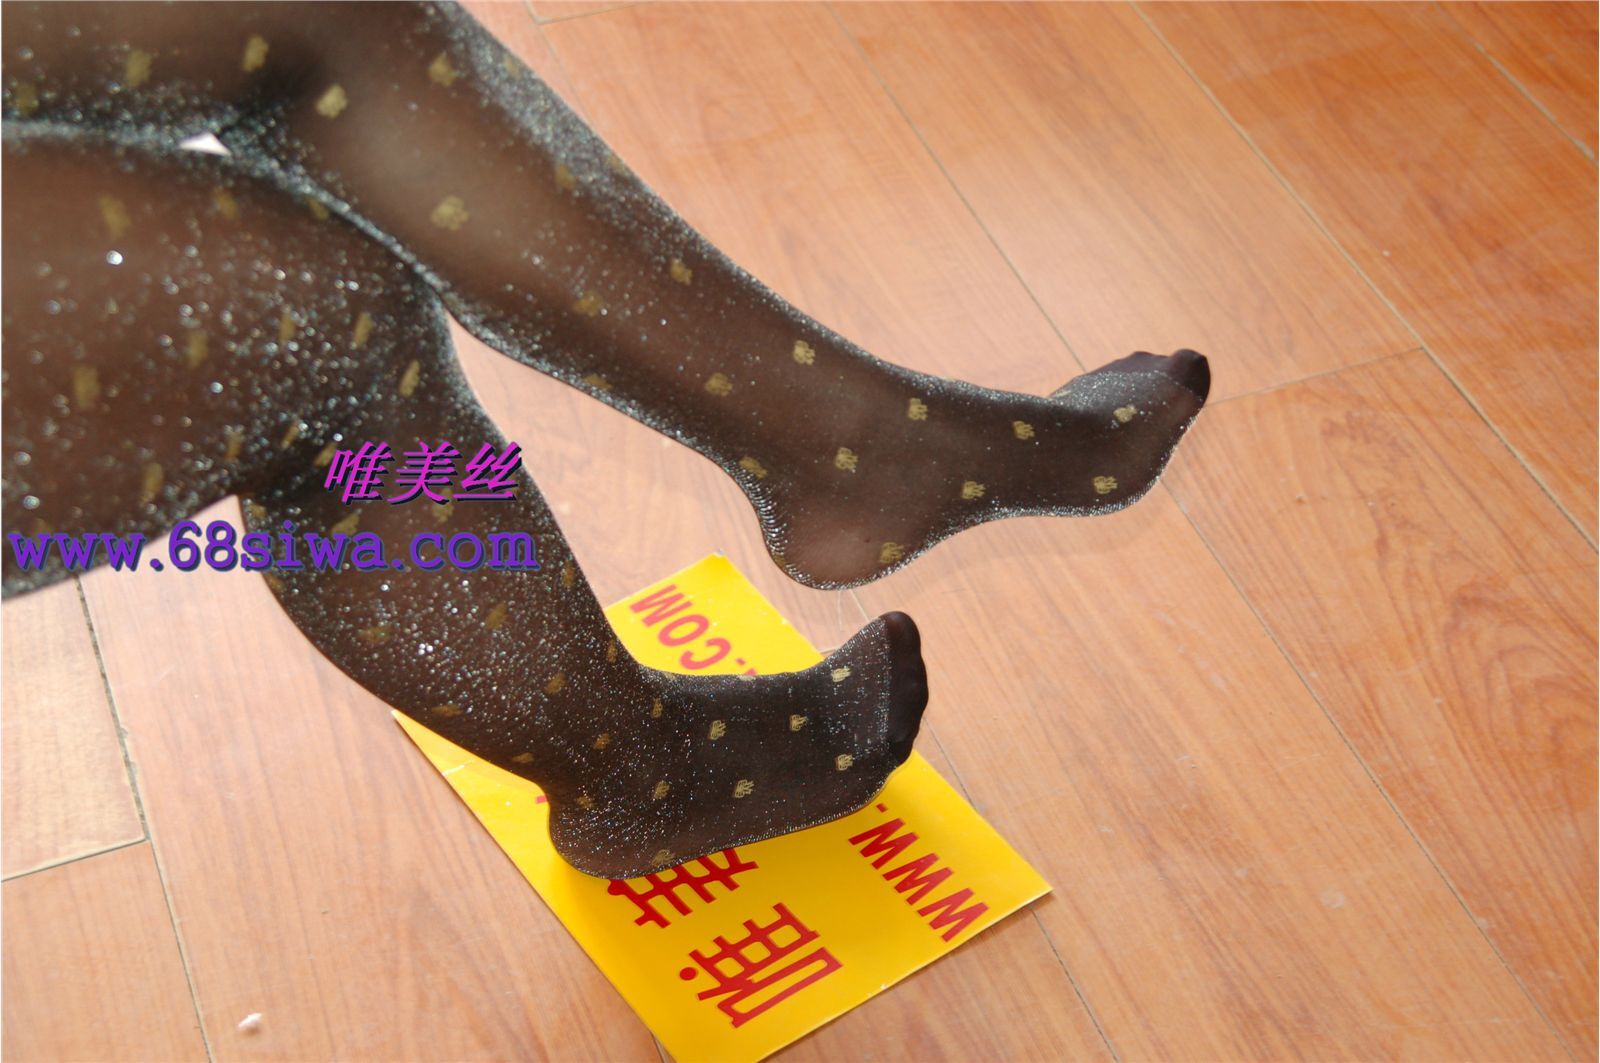 Weimeisi 11019 Lulu's original set of Chinese silk stockings